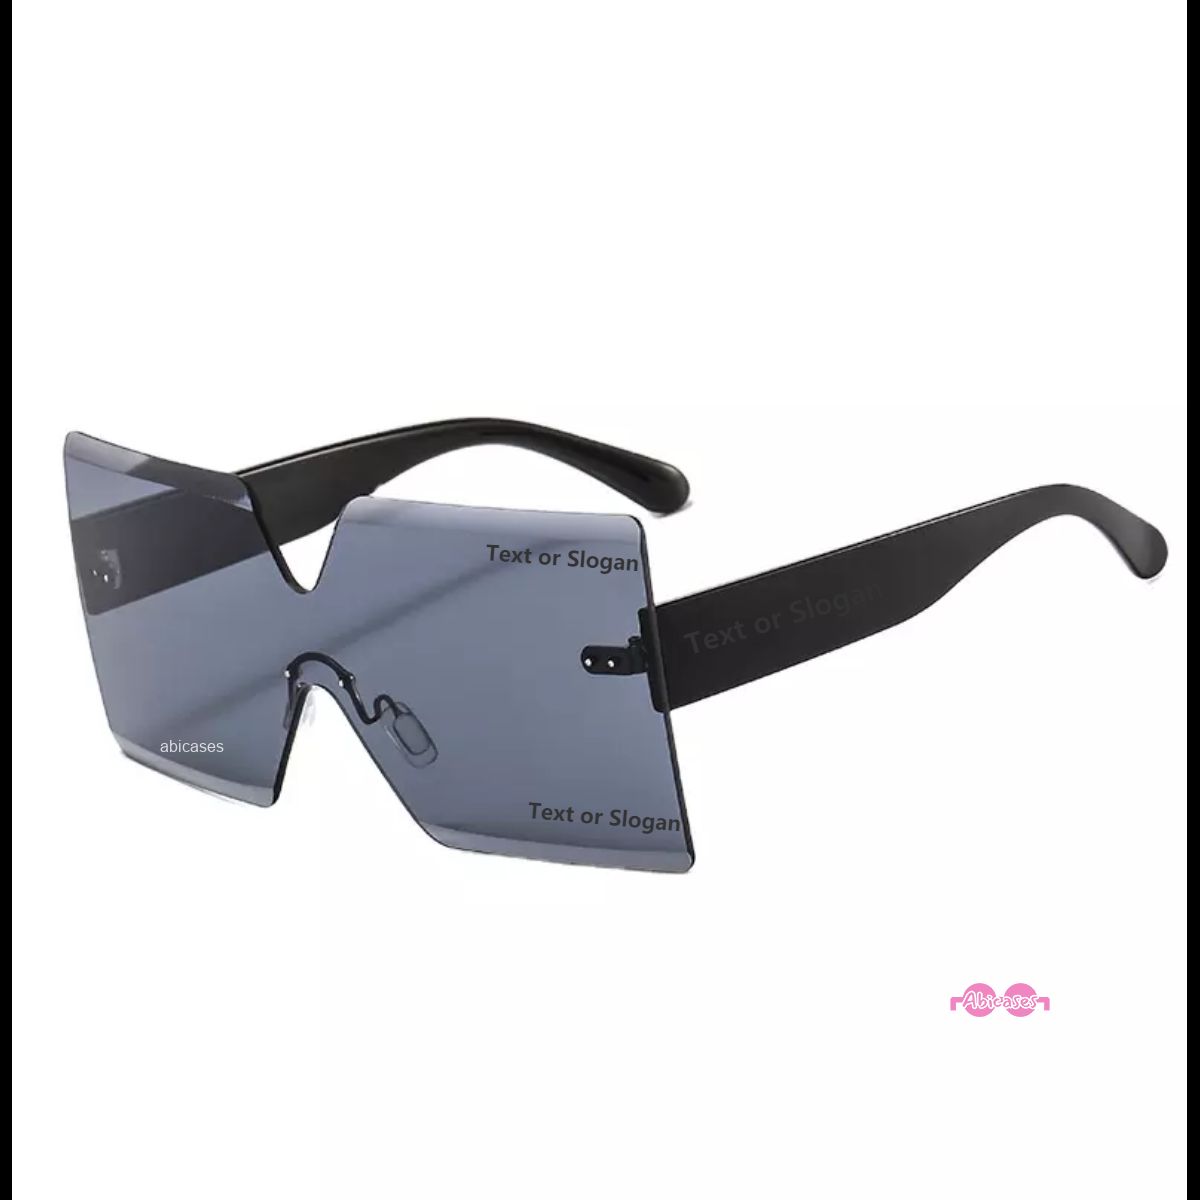 piranha sunglasses Oliver Peoples